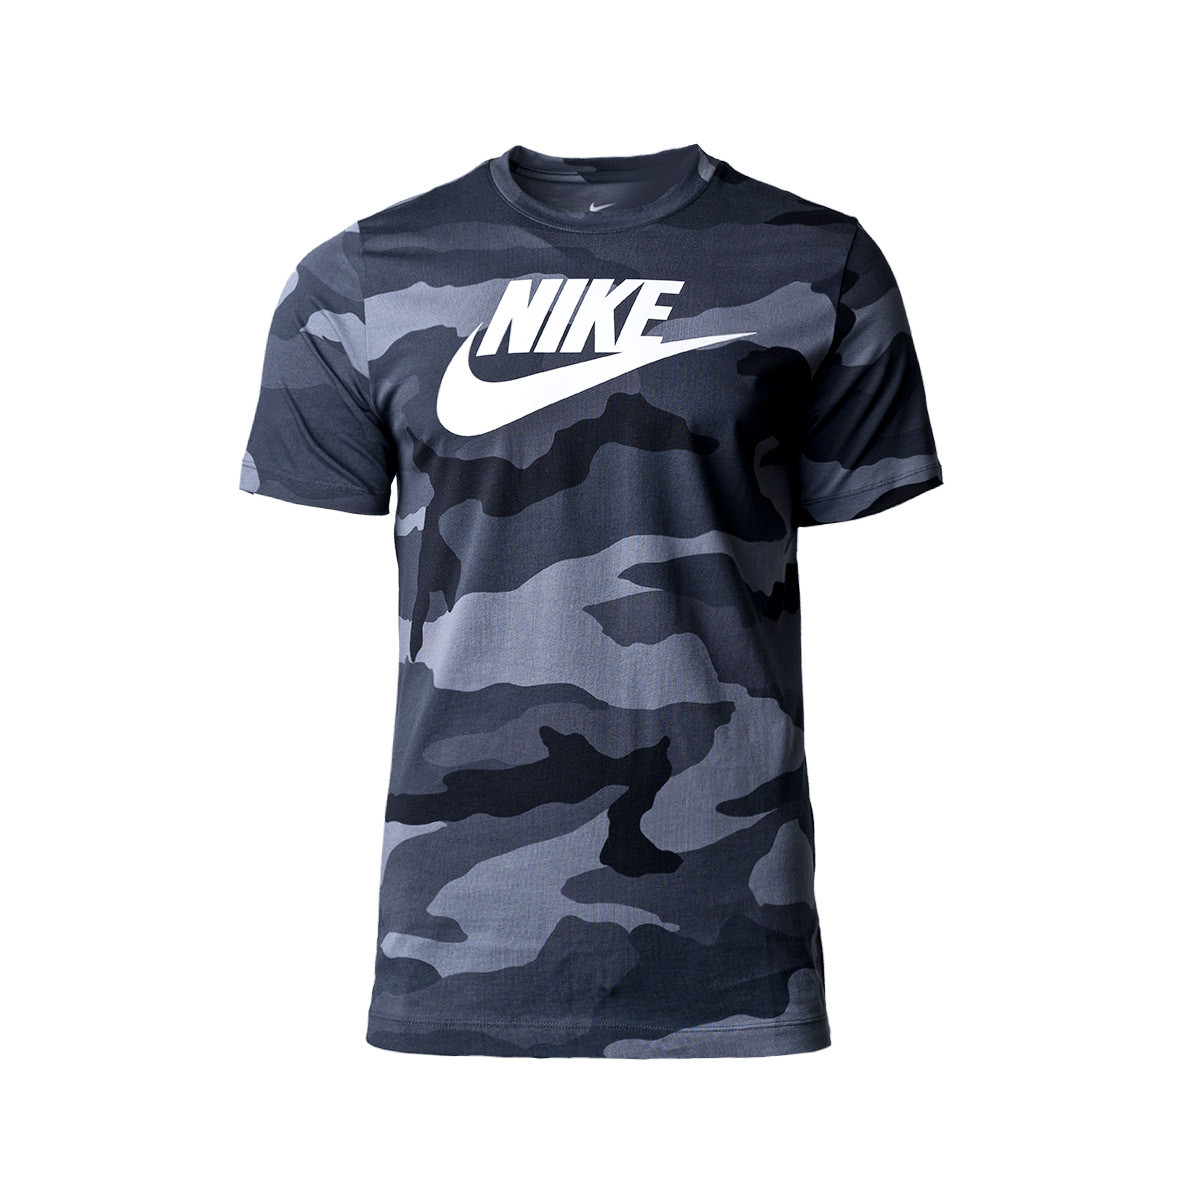 Jersey Nike Sportswear Camo Dark grey 